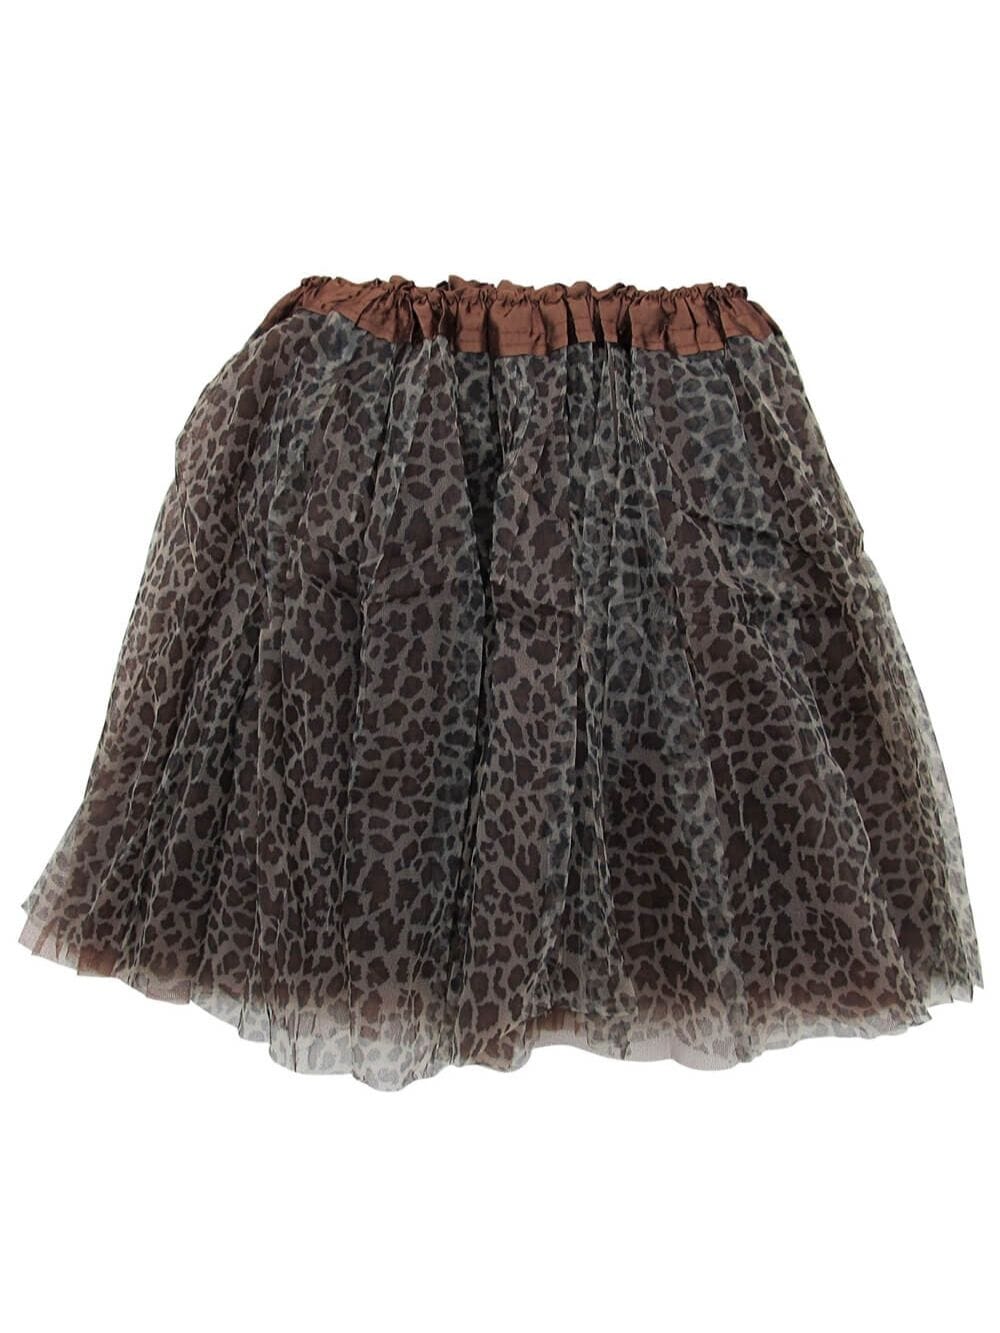 Cheetah Plus Size Adult Tutu Skirt - Women's Plus Size 3- Layer Basic Ballet Costume Dance Tutus - Sydney So Sweet